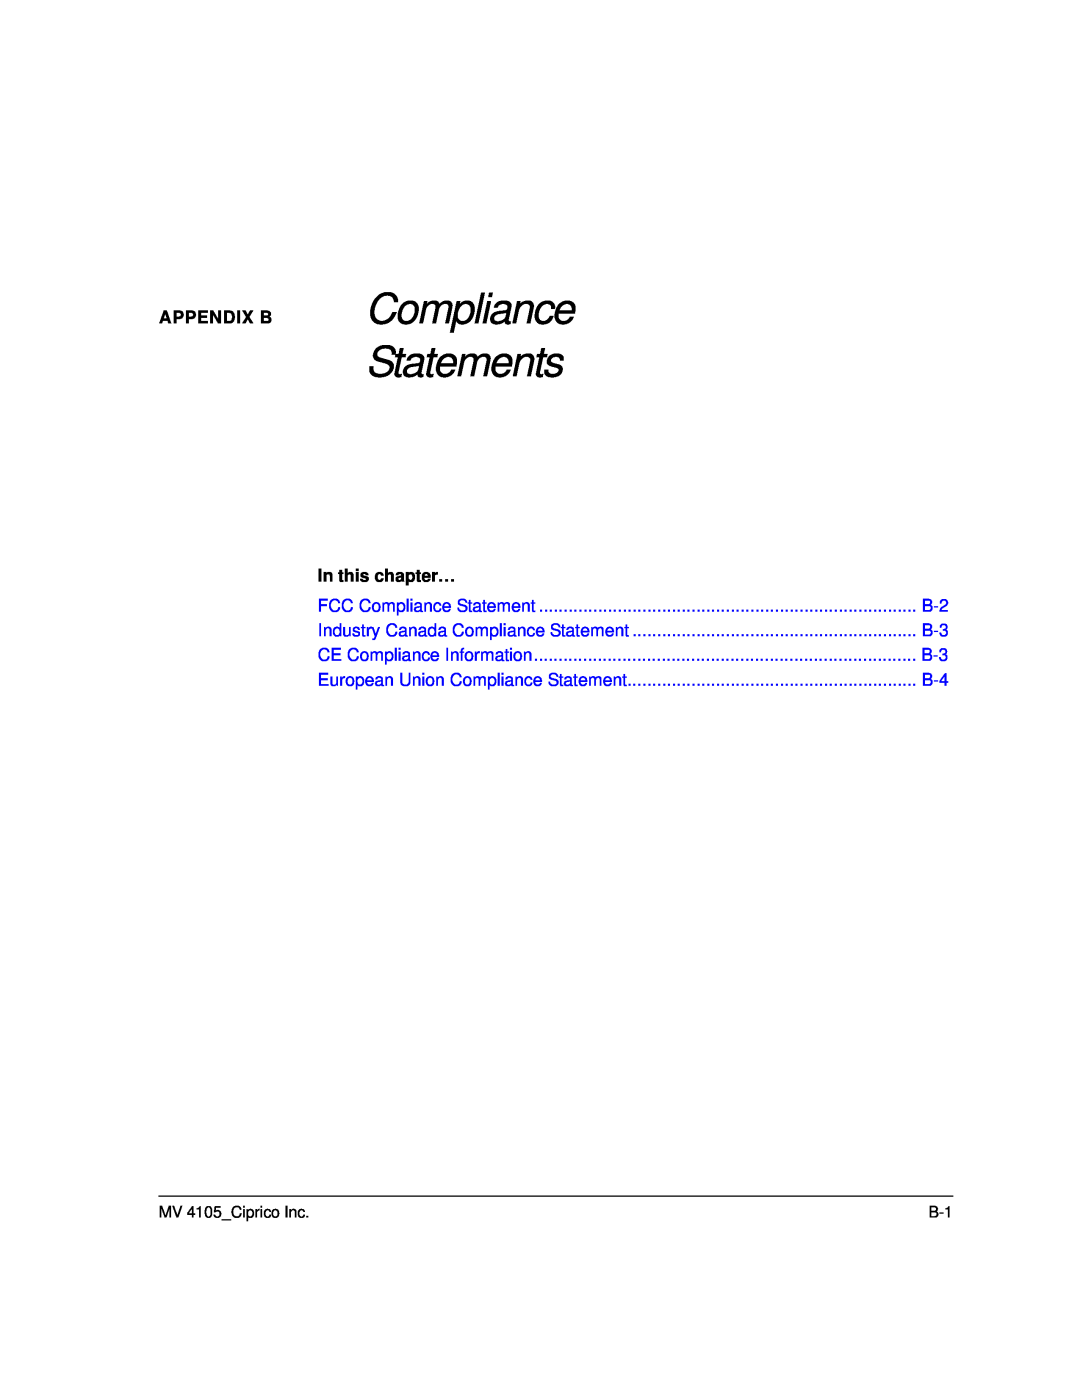 Ciprico 4105 Series Compliance Statements, Appendix B, FCC Compliance Statement, Industry Canada Compliance Statement 